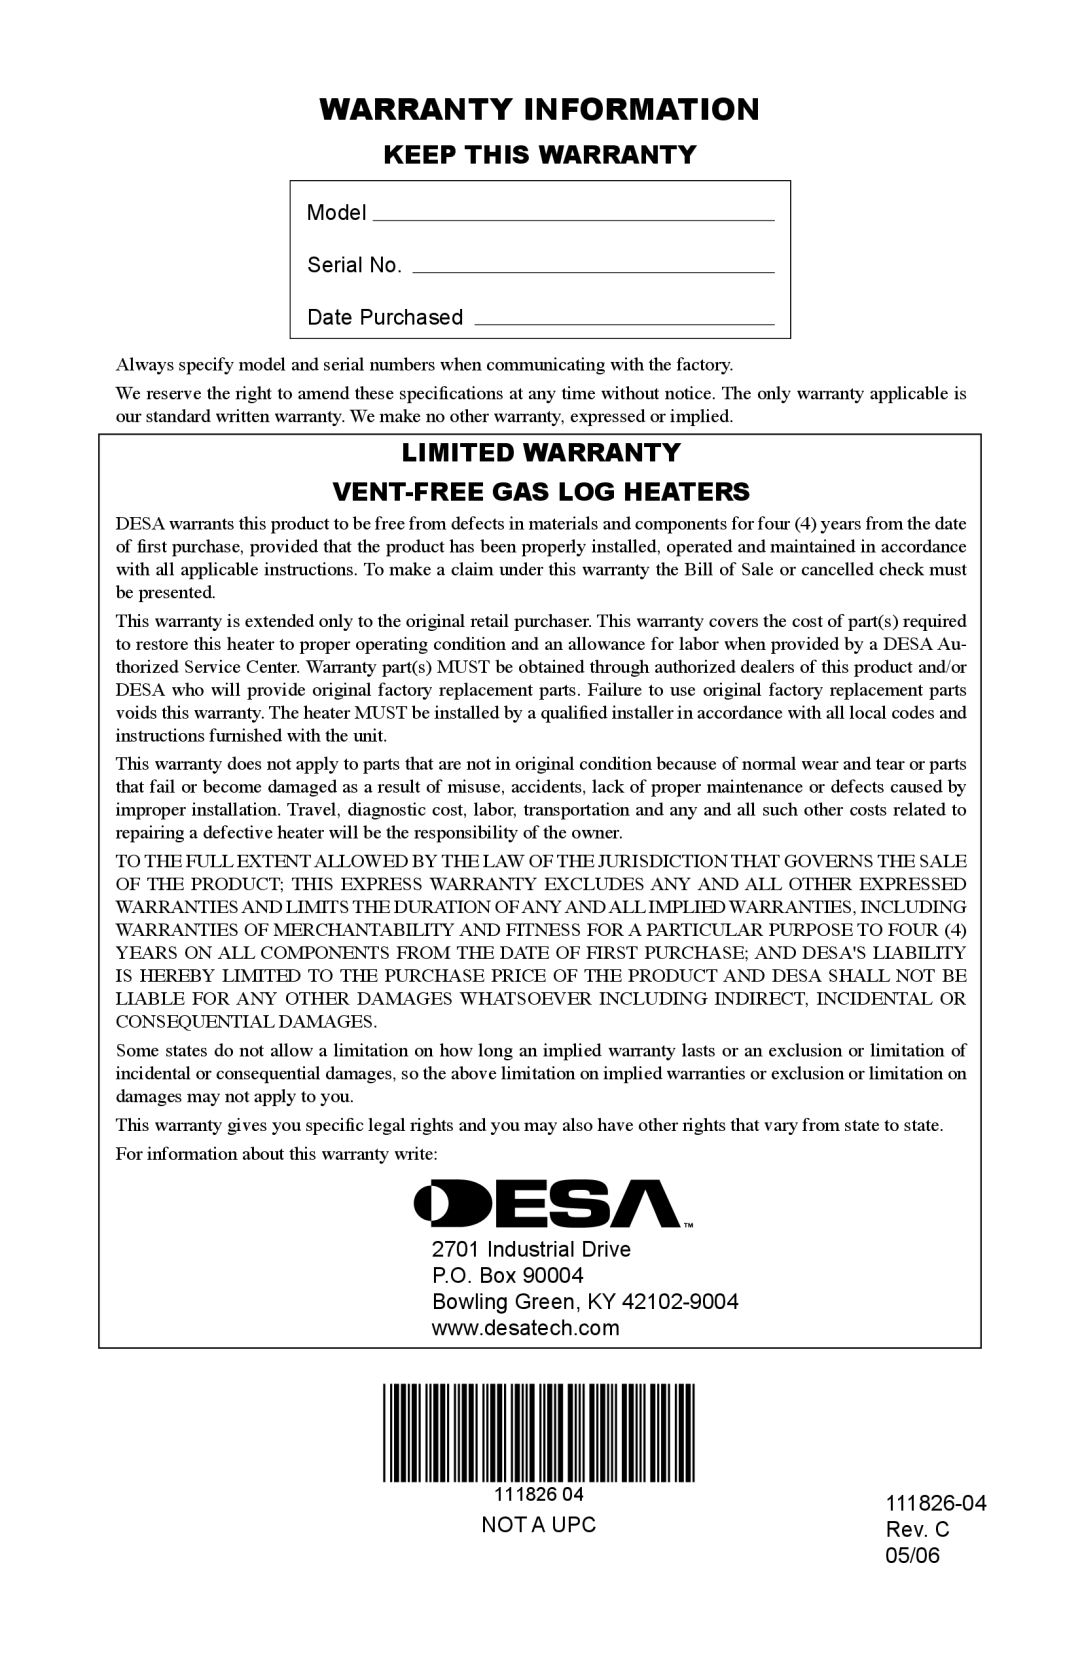 Desa VF-30N-PJD installation manual Warranty Information, Keep This Warranty, Limited Warranty Vent-Free Gas Log Heaters 